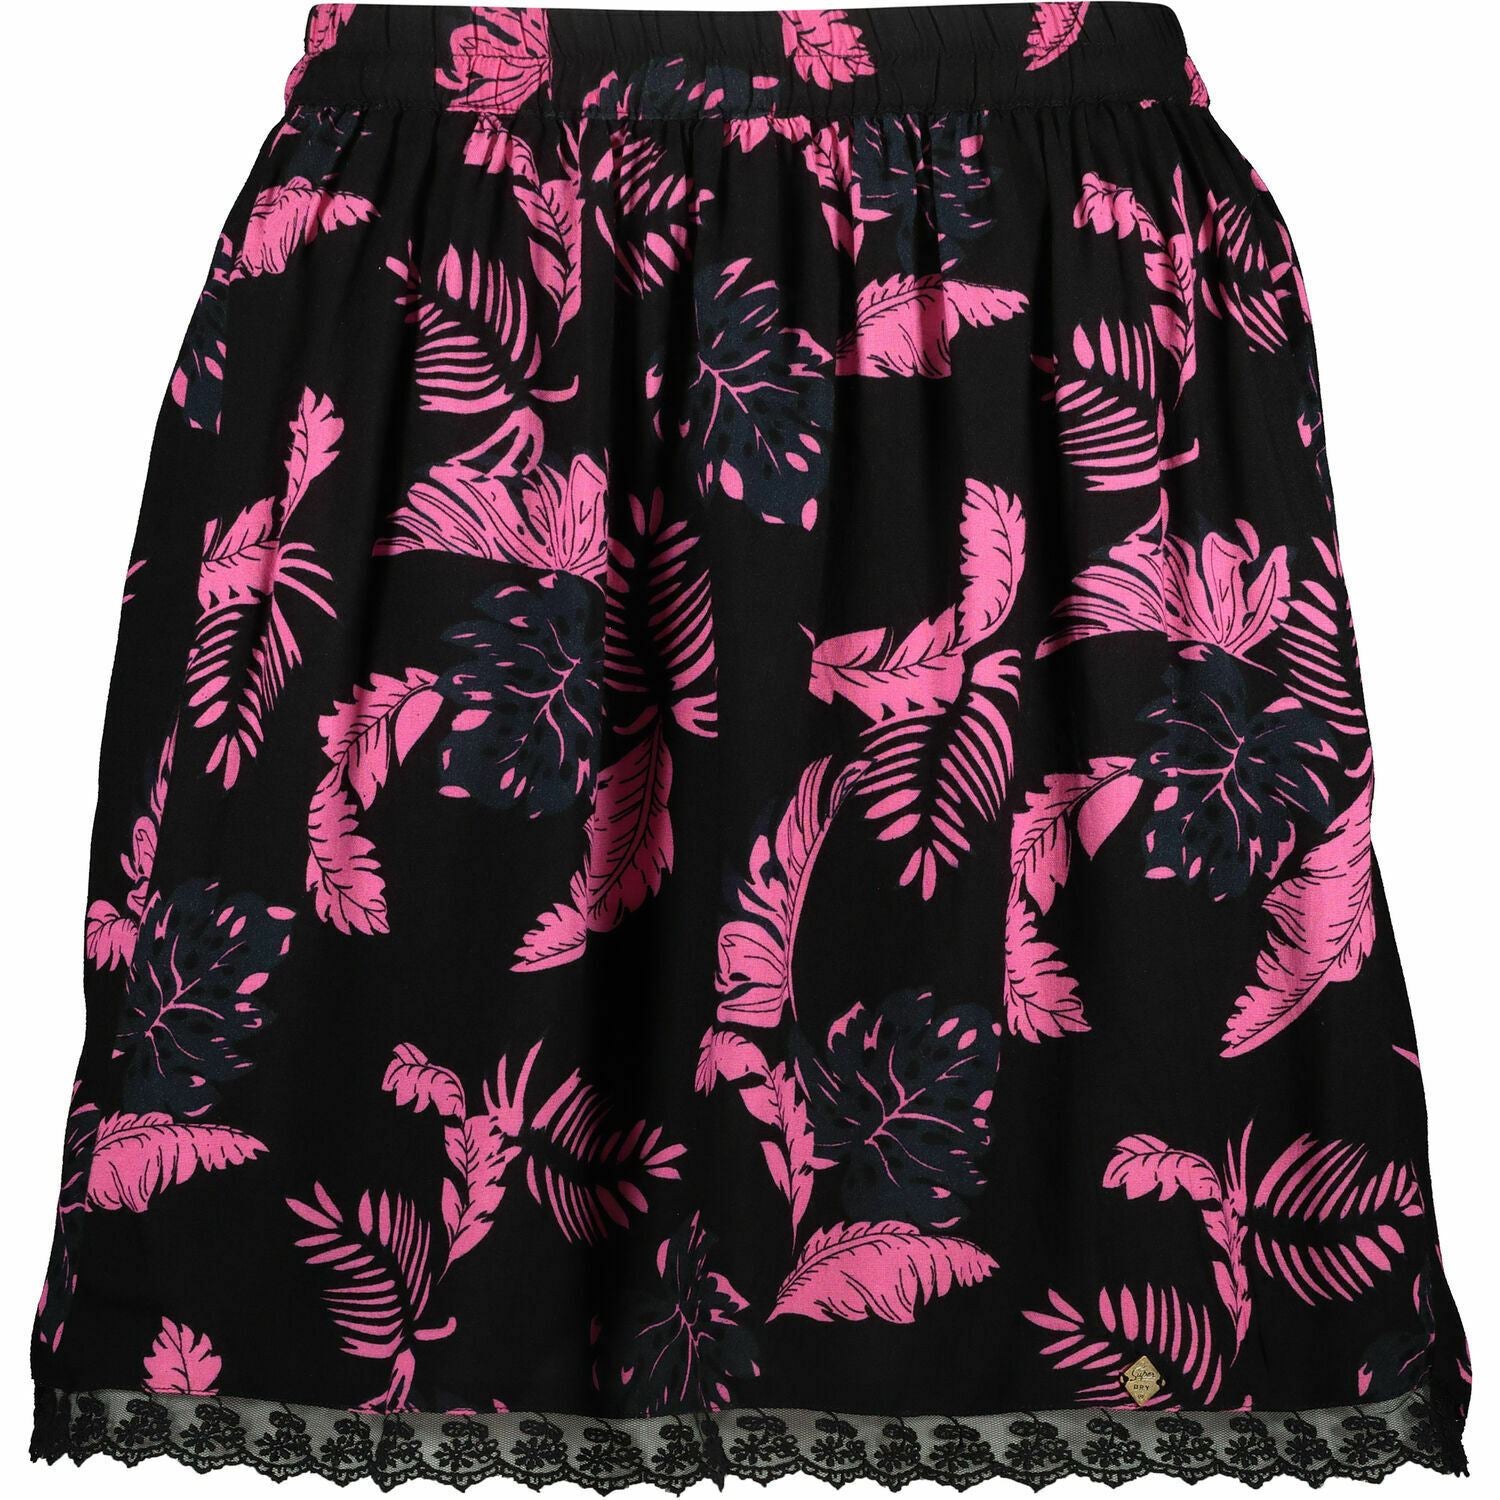 SUPERDRY Women's SERENA DITSY Skirt, Black/Pink Palm Leaf Print, size S / UK 10